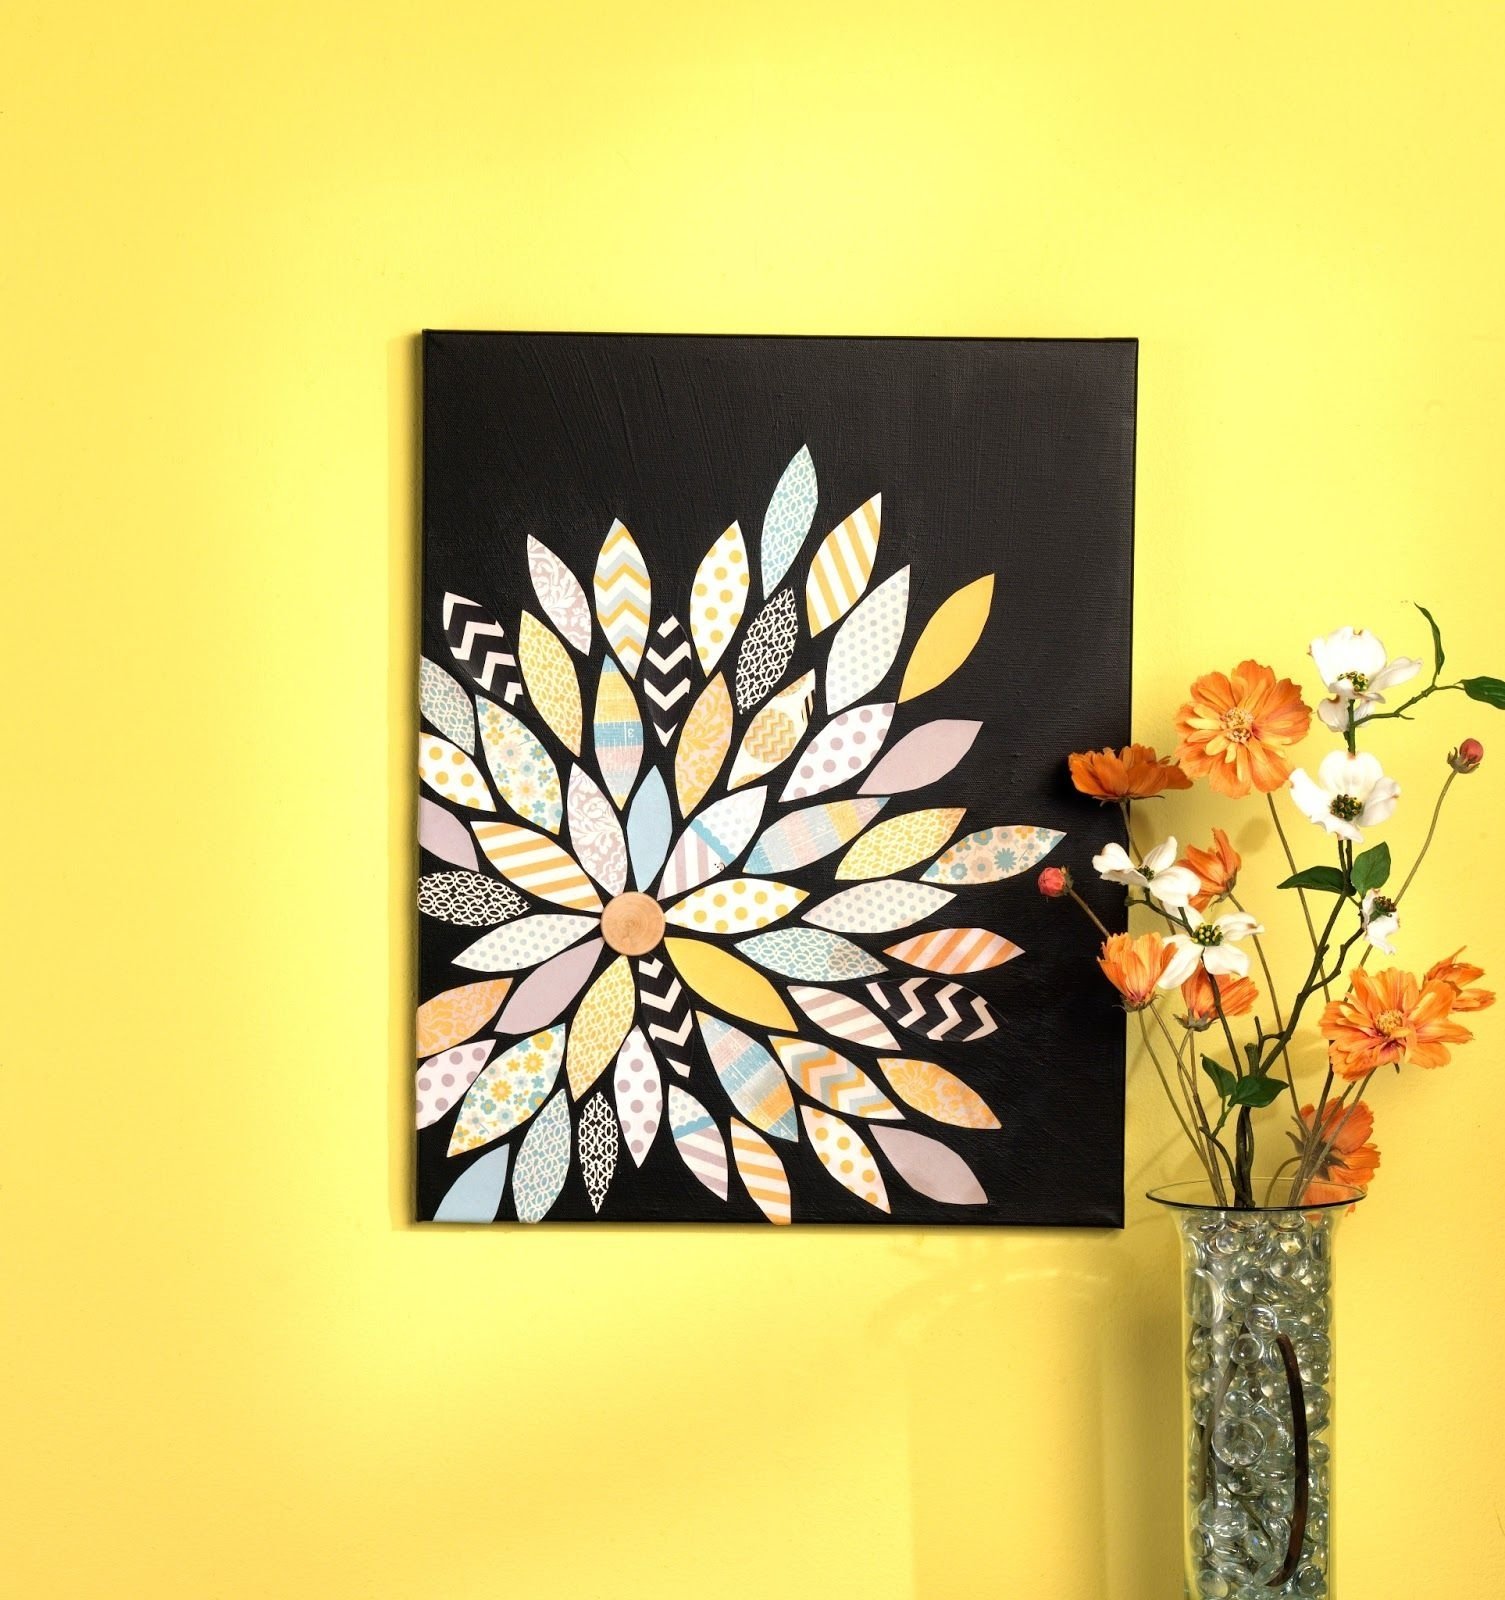 10 Stylish Easy Diy Canvas Painting Ideas scrapbook paper mod podged fabric pieced flower diy canvas art 2022